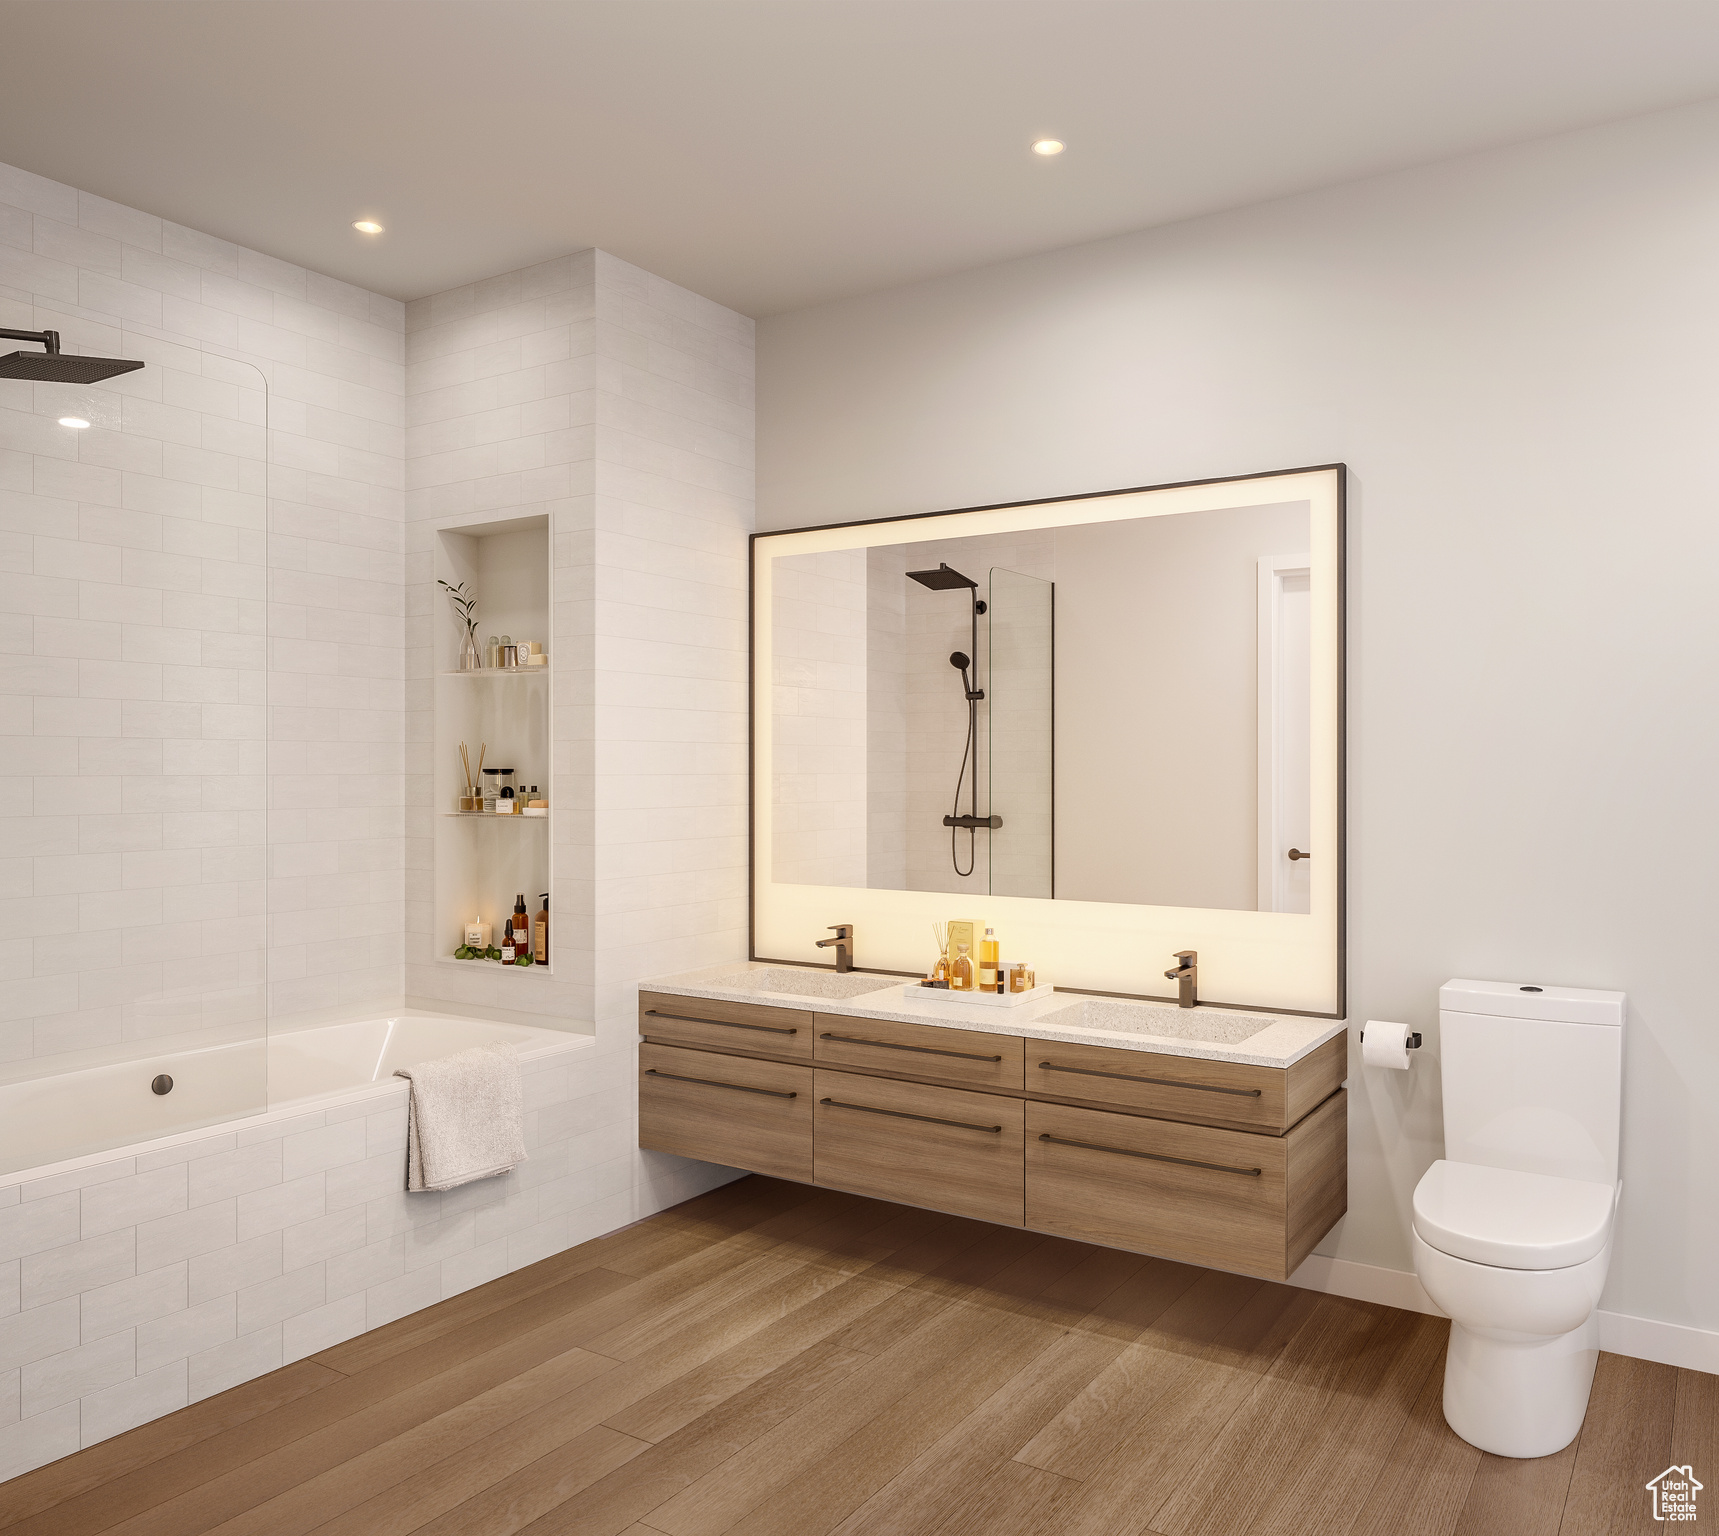 Full bathroom with toilet, dual sinks, large vanity, wood-type flooring, and tiled shower / bath